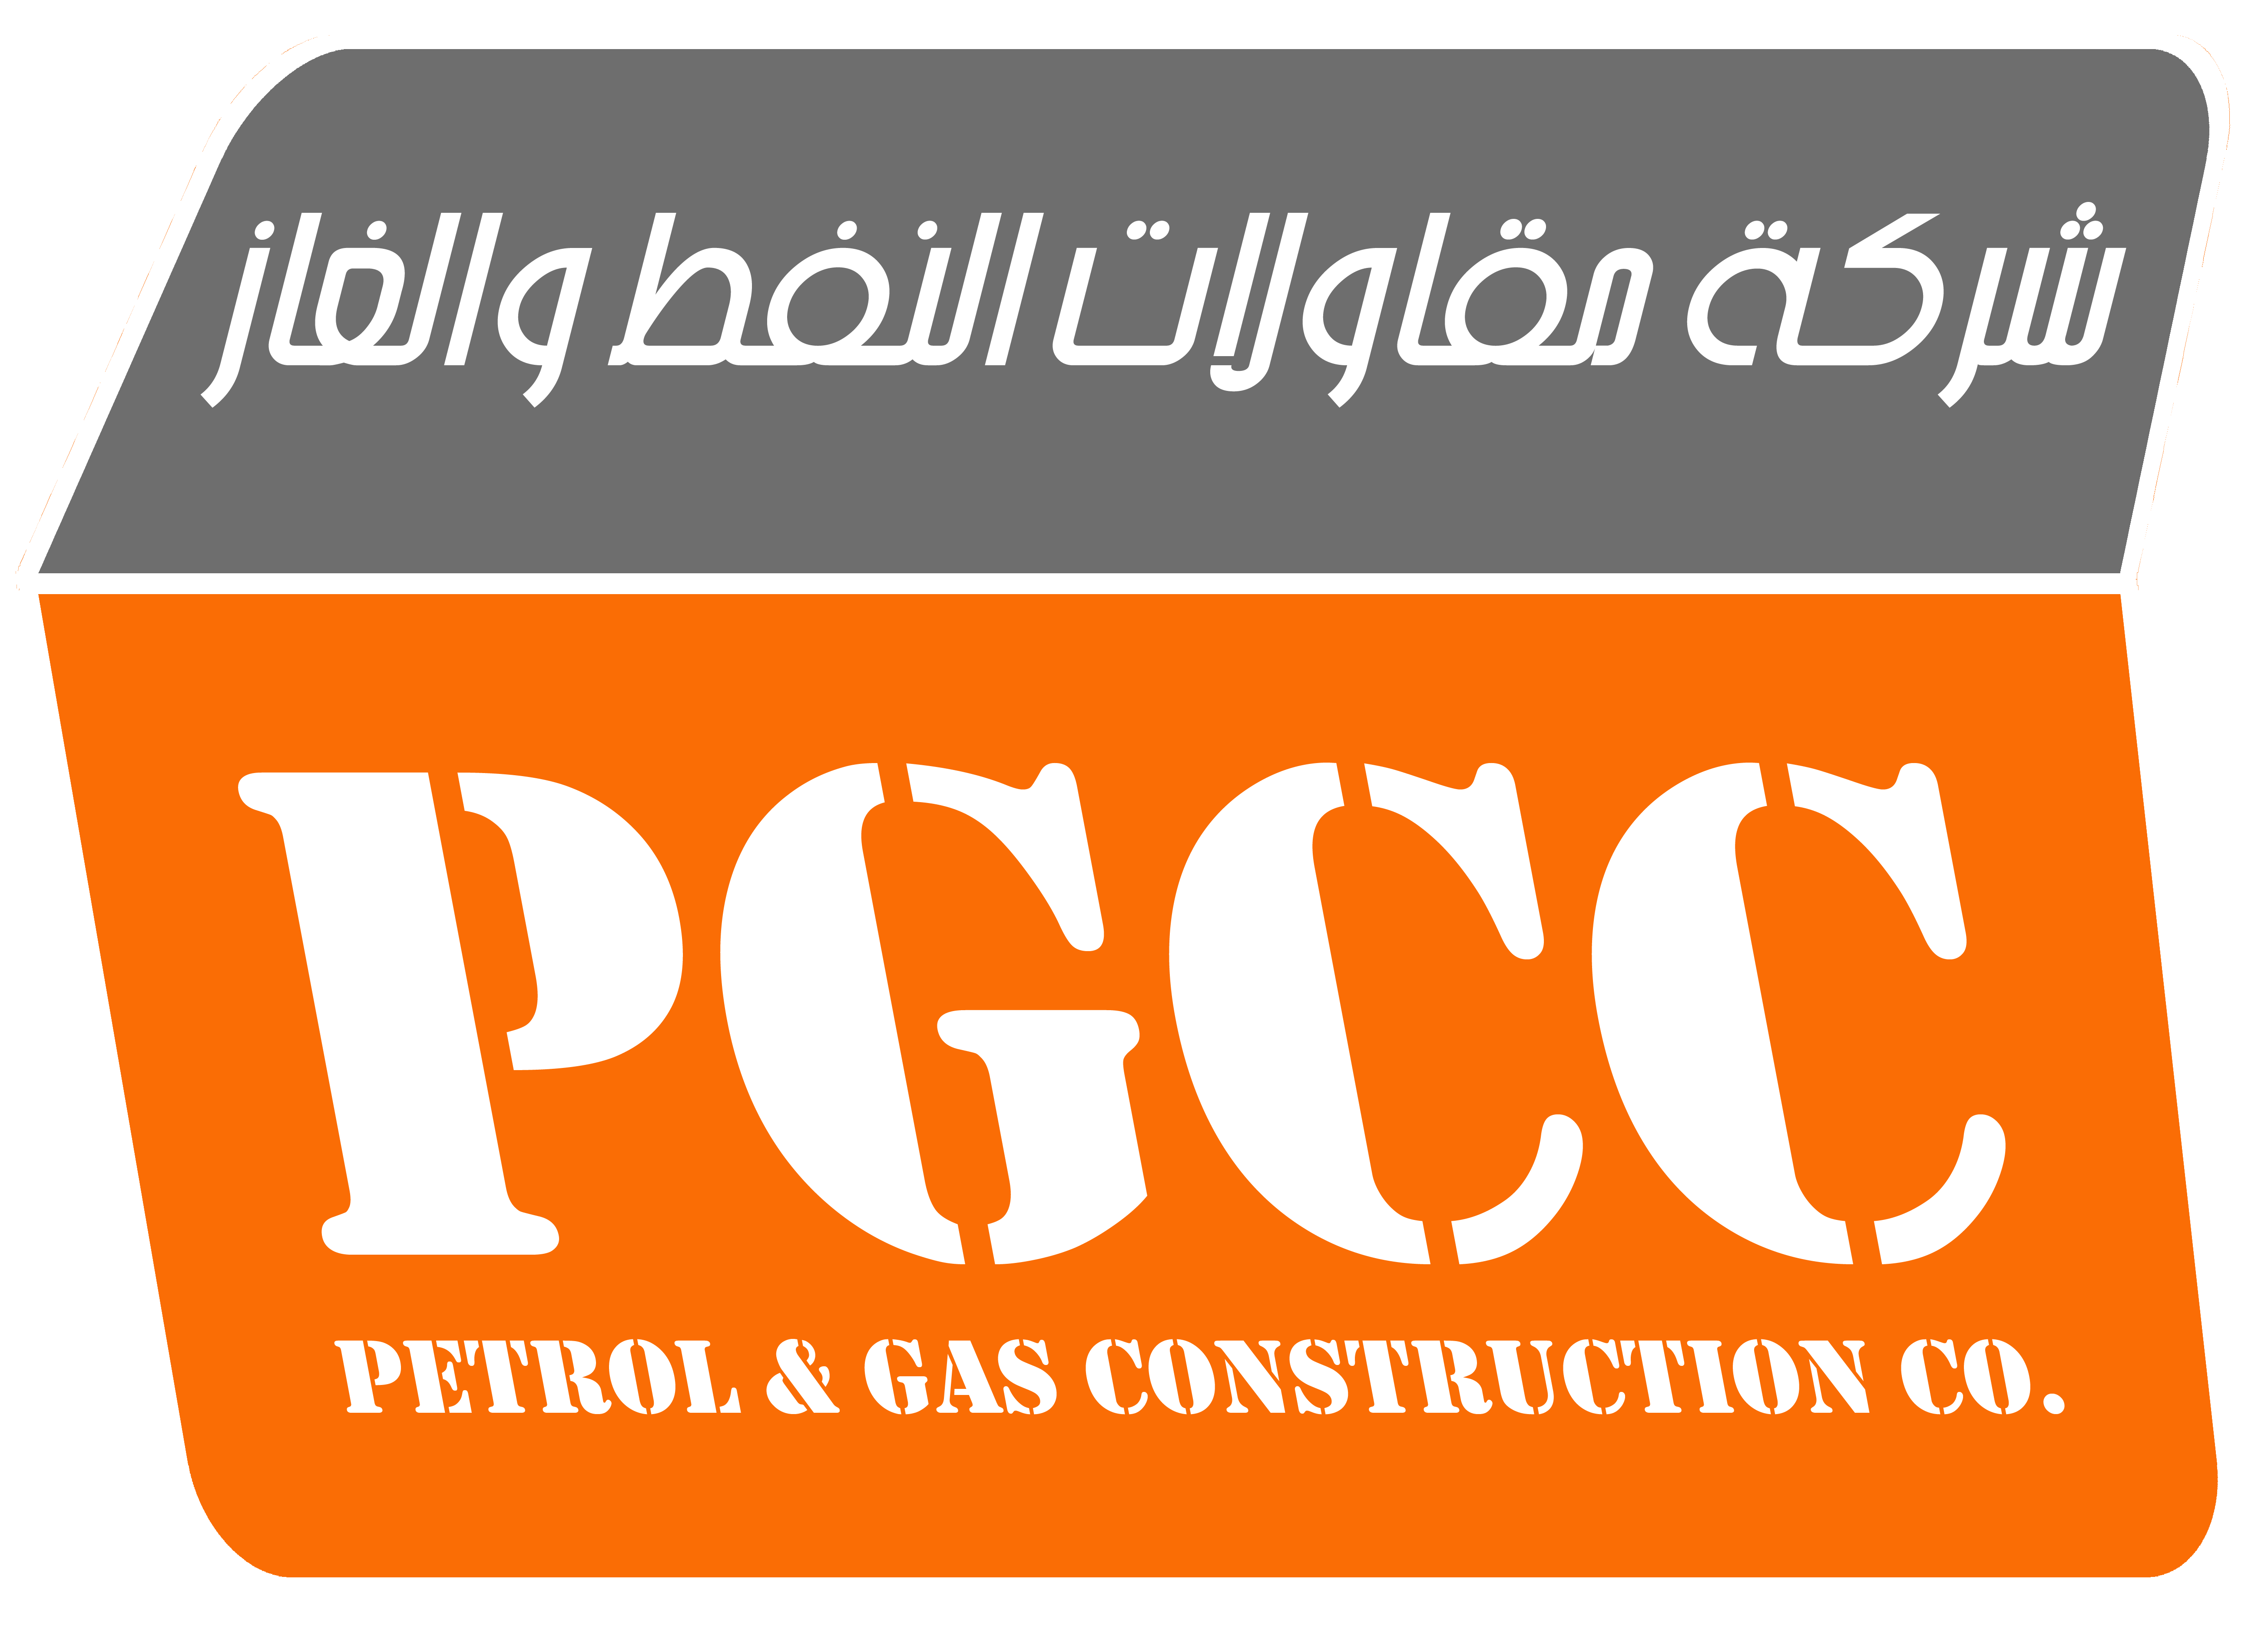 Petrol & Gas Construction Co.